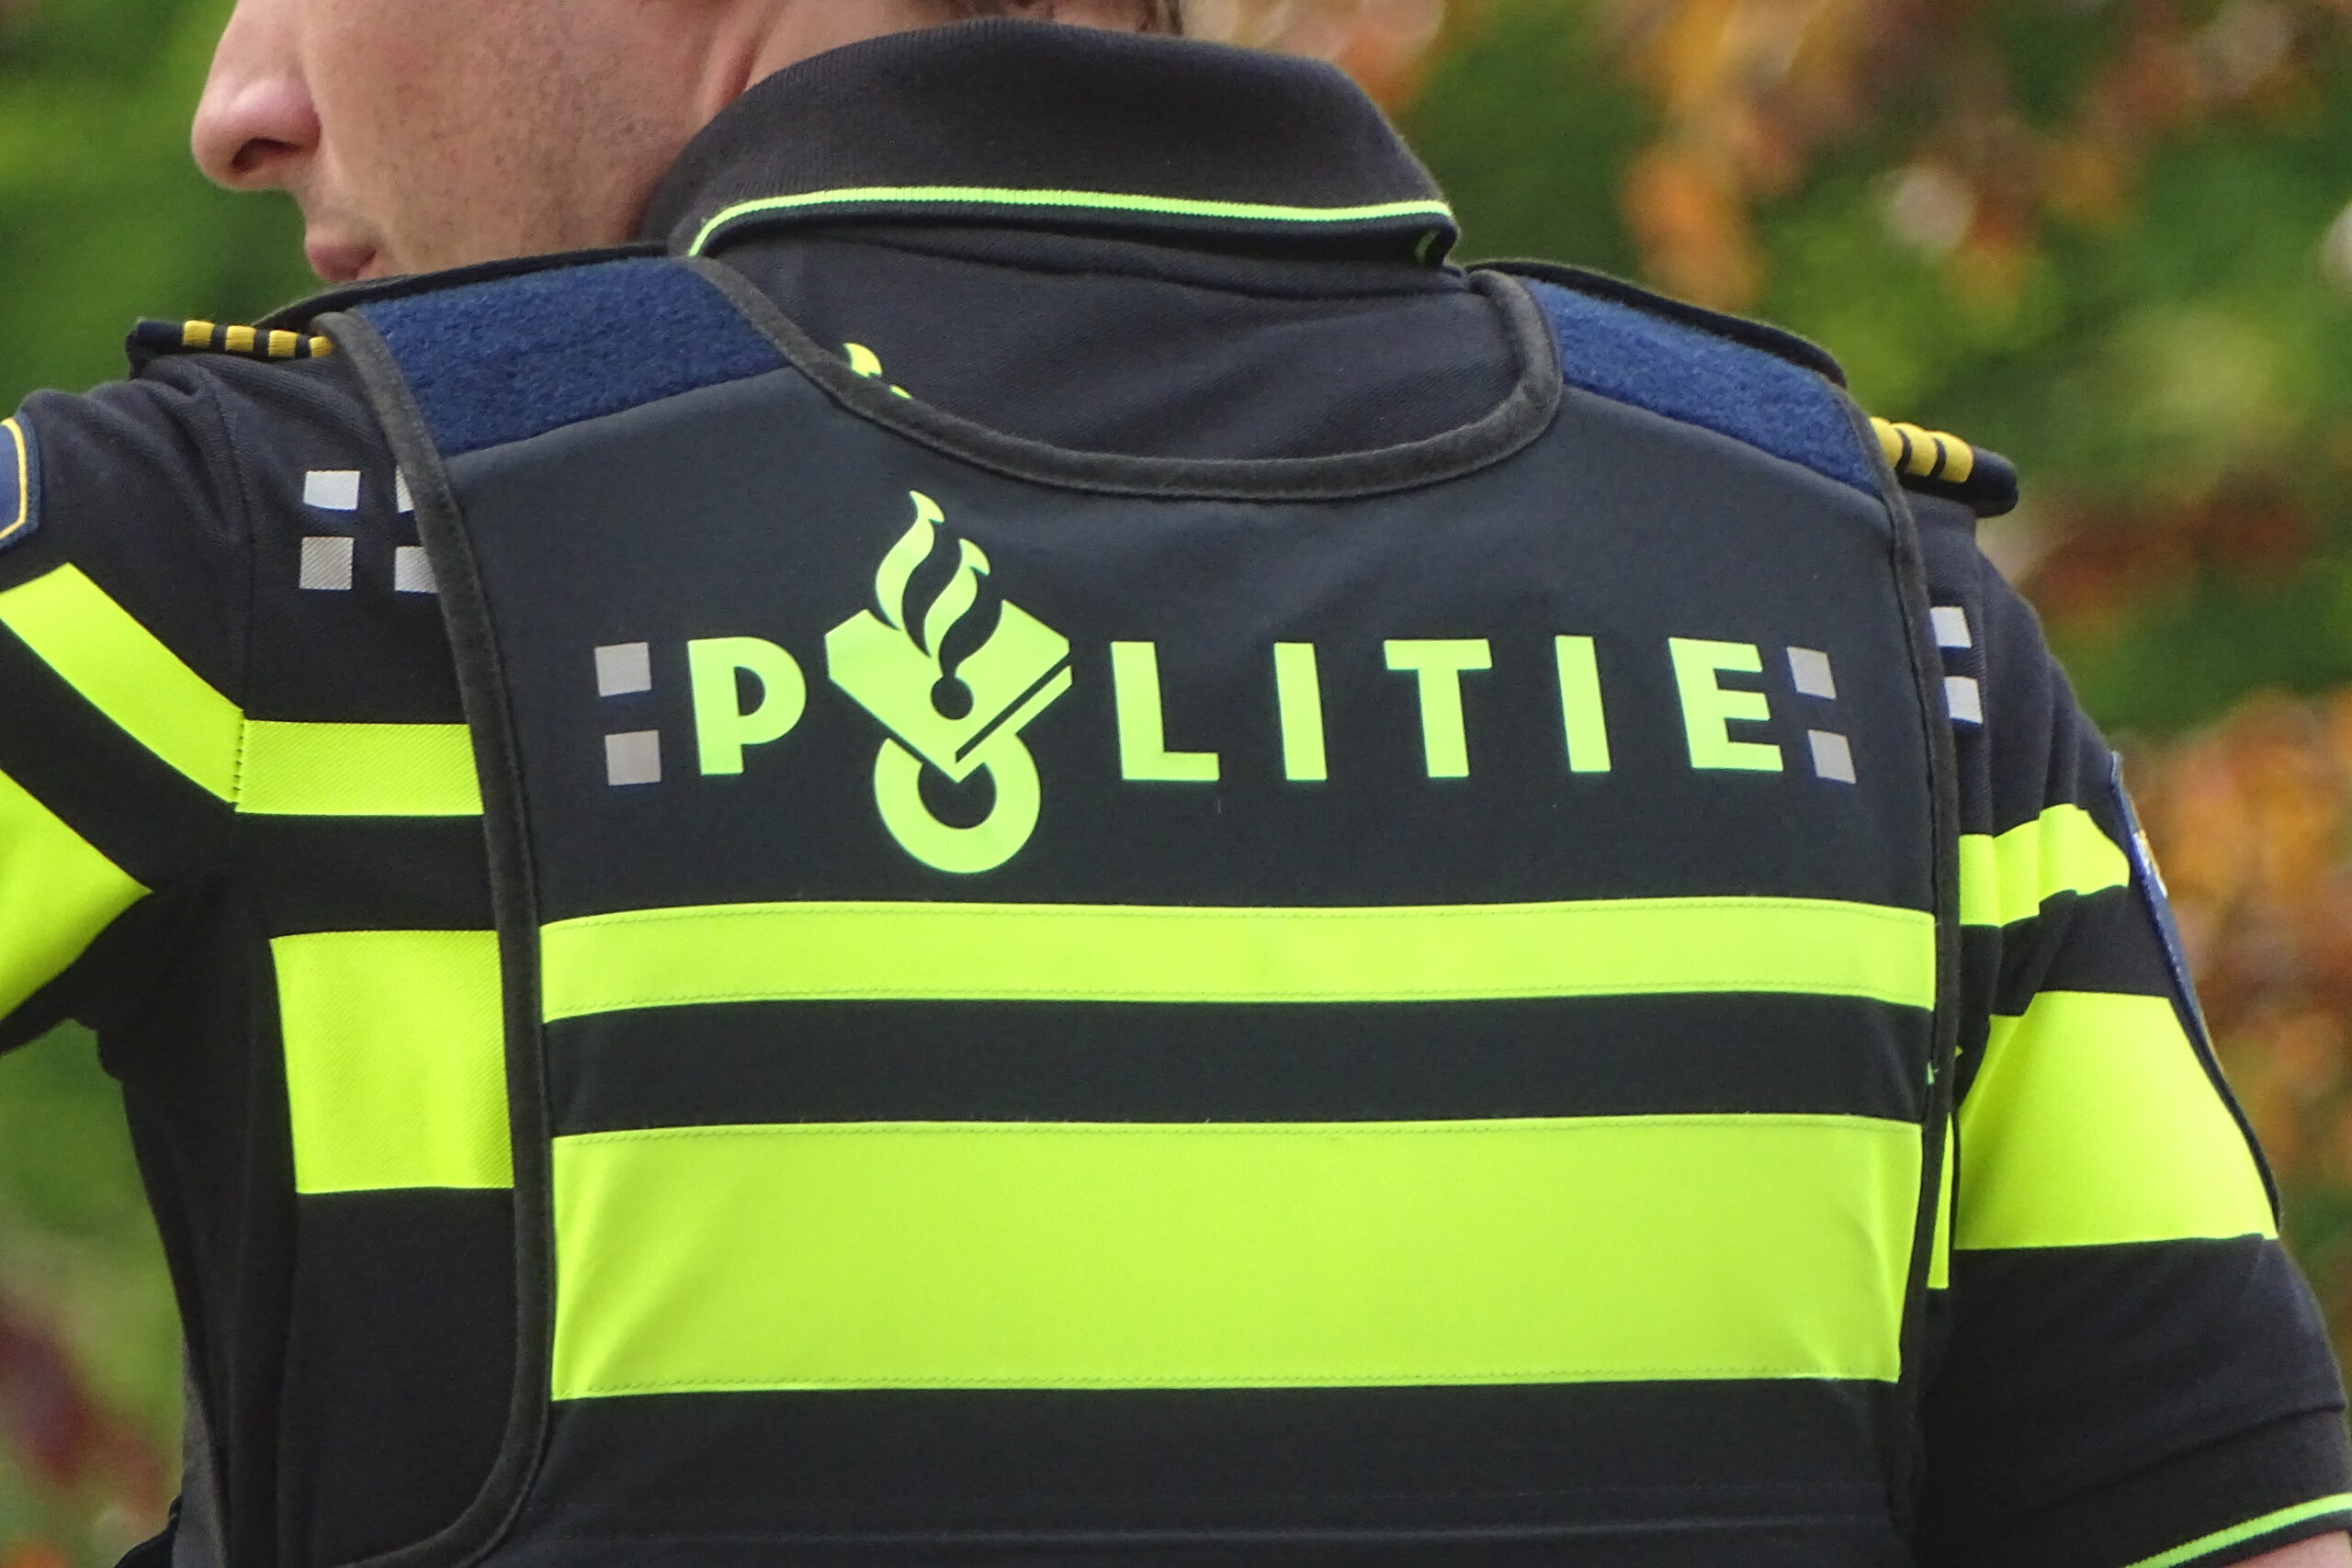 Vijf verdachten vast na zoektocht verdachte tassen Nijmegen